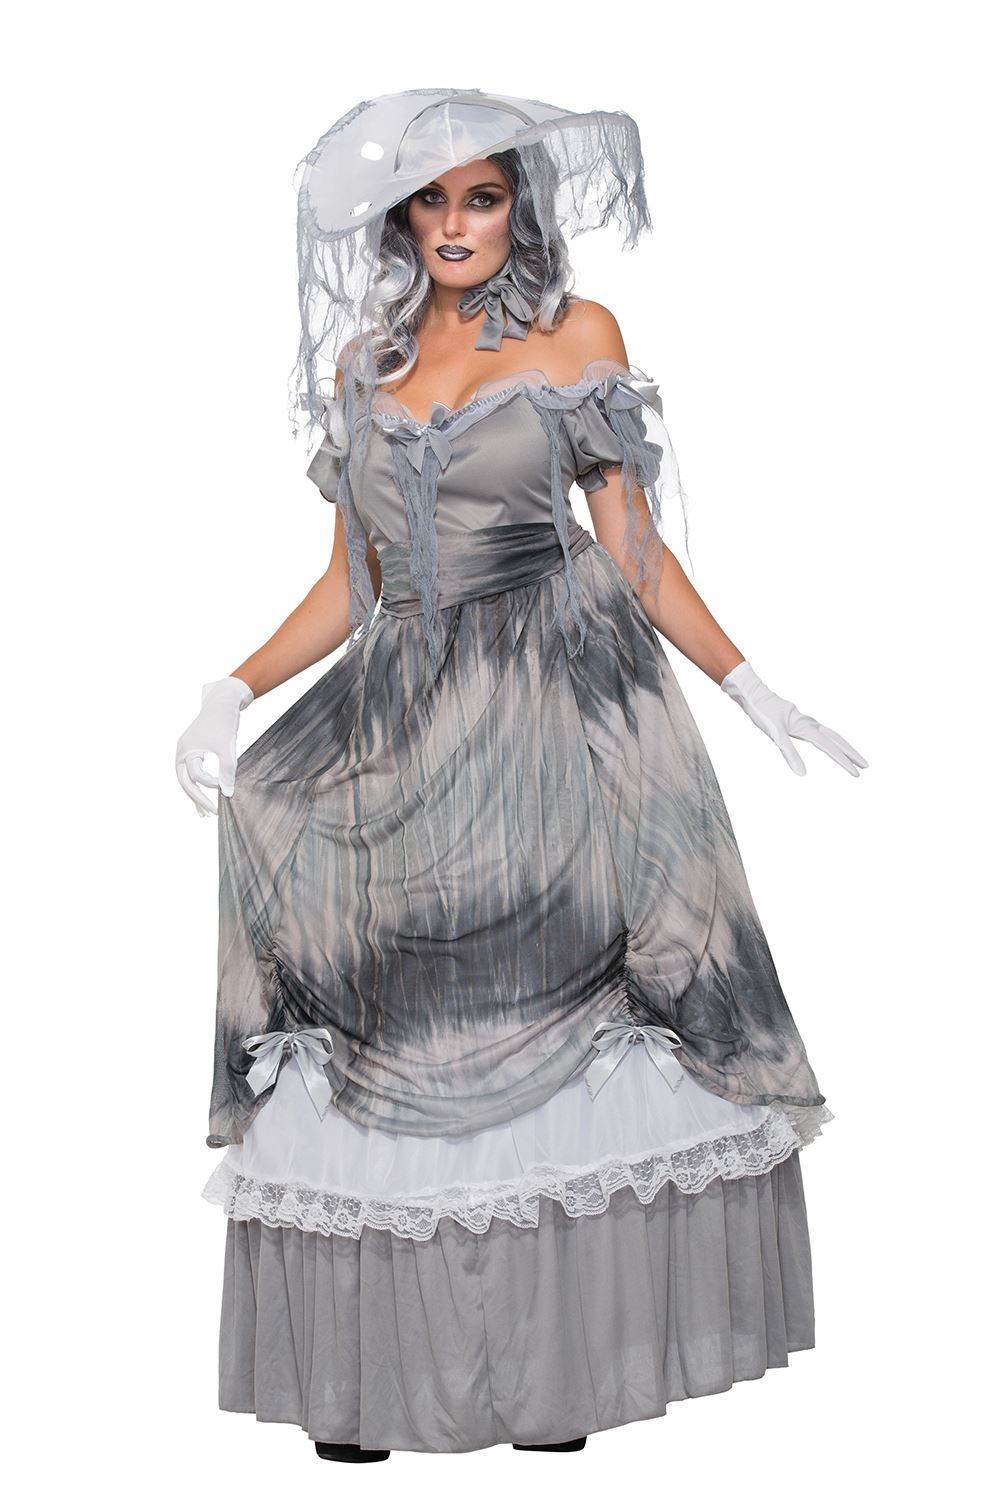 https://www.thecostumeland.com/images/zoom/fn76987-zombie-dead-bride-woman-halloween-costumes.jpg